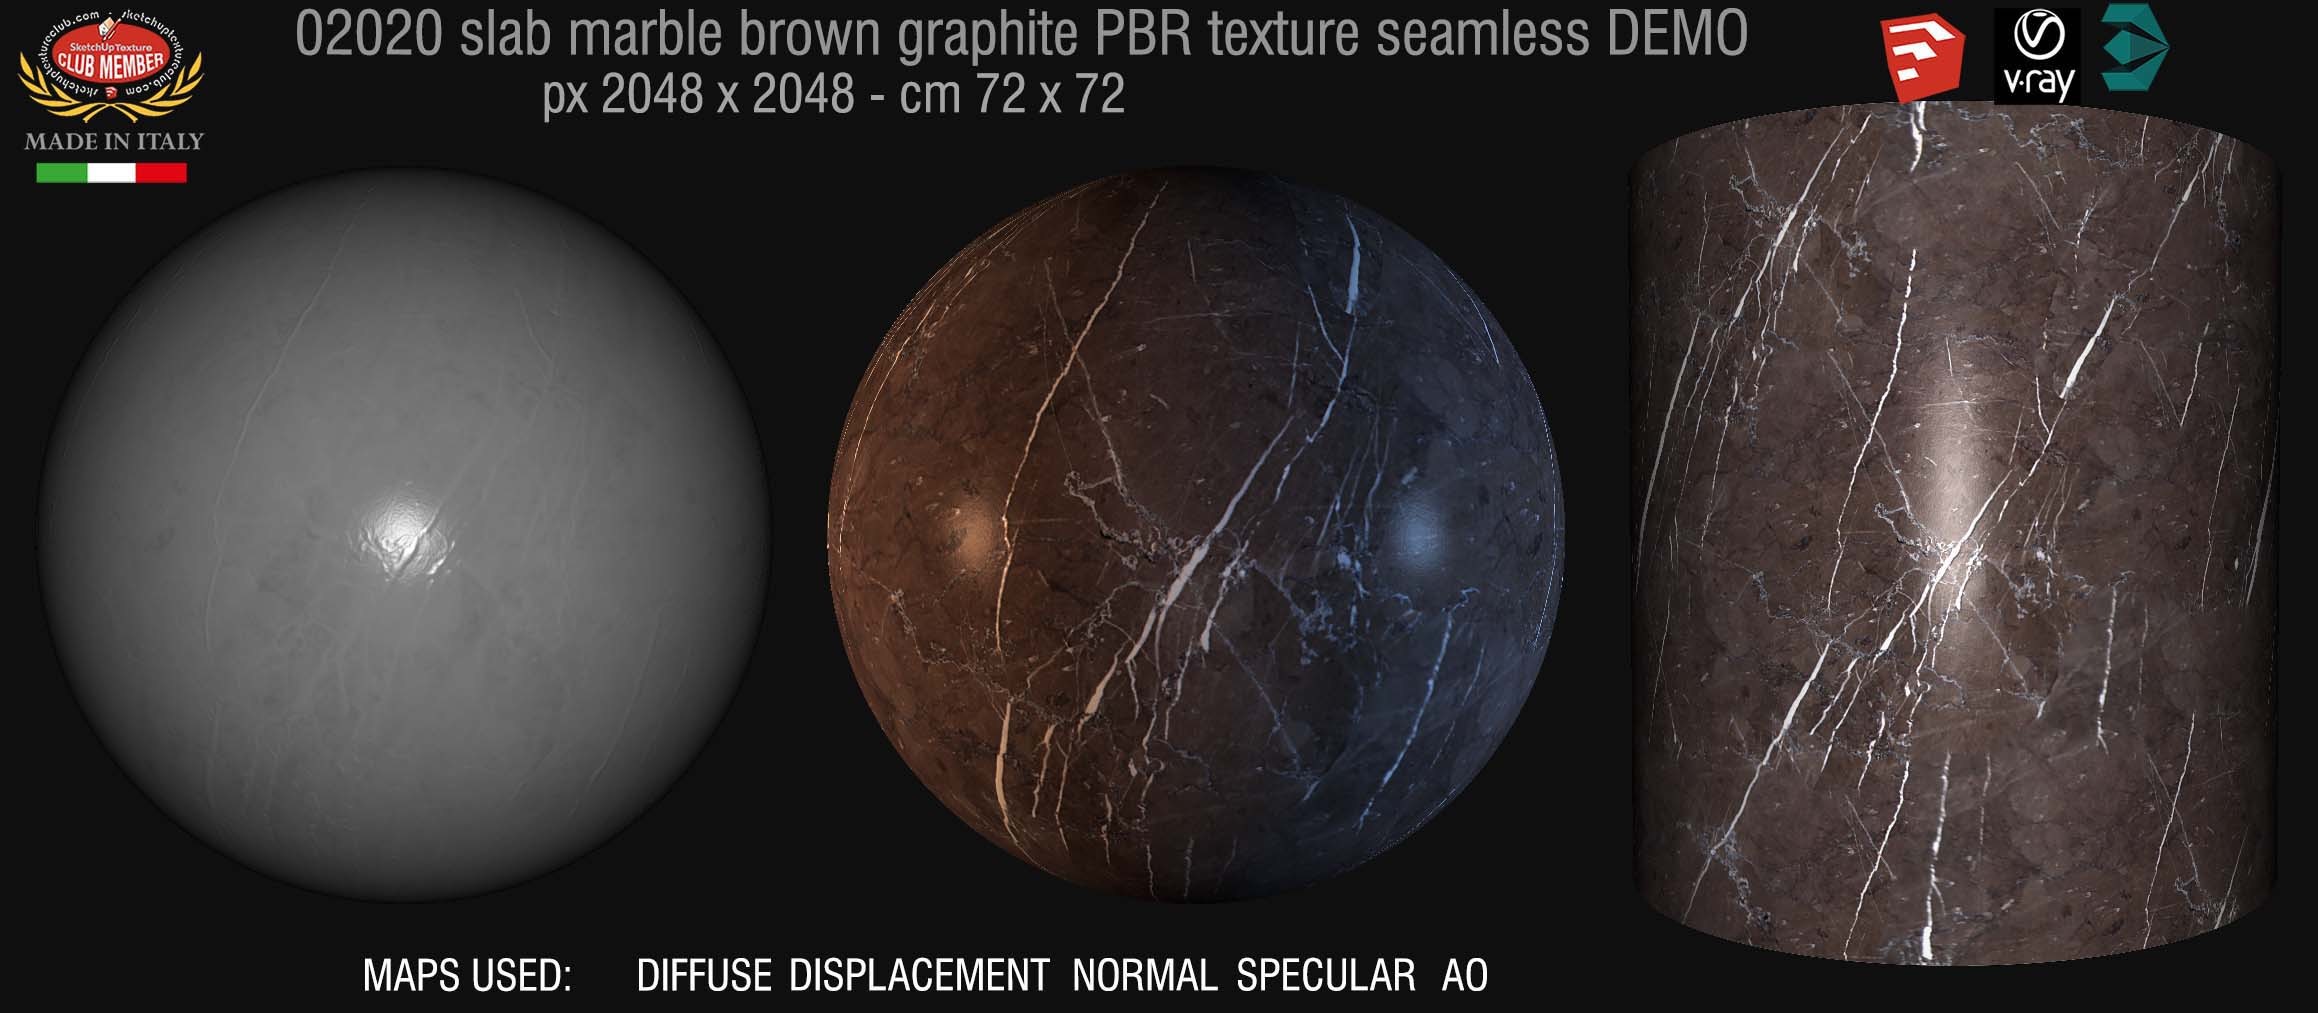 02020 slab brown graphite marble PBR texture seamless DEMO